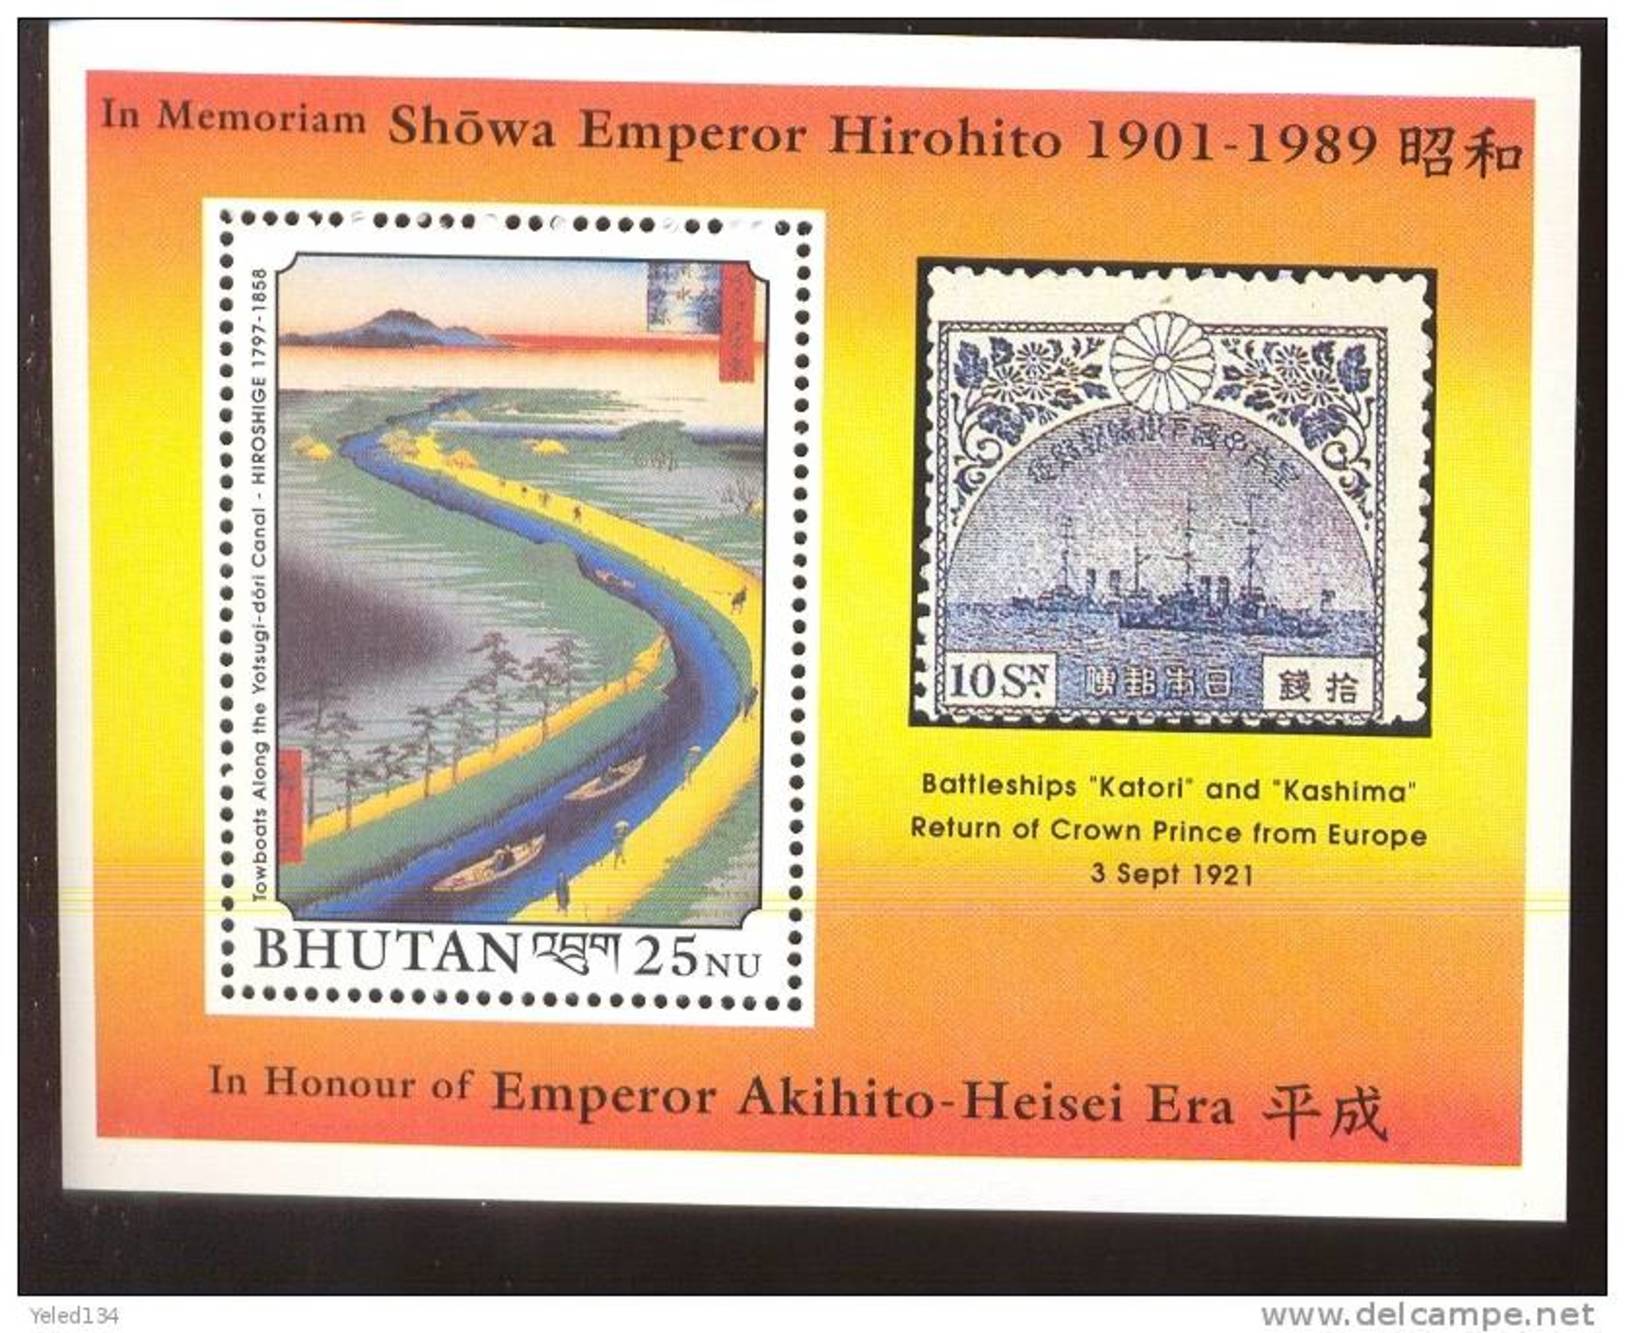 MNH BHUTAN # 858 : SOUVENIR SHEET ART HIROSHIGE EMPEROR HIROHITO AKIHITO HEISEI ERA - Bhután